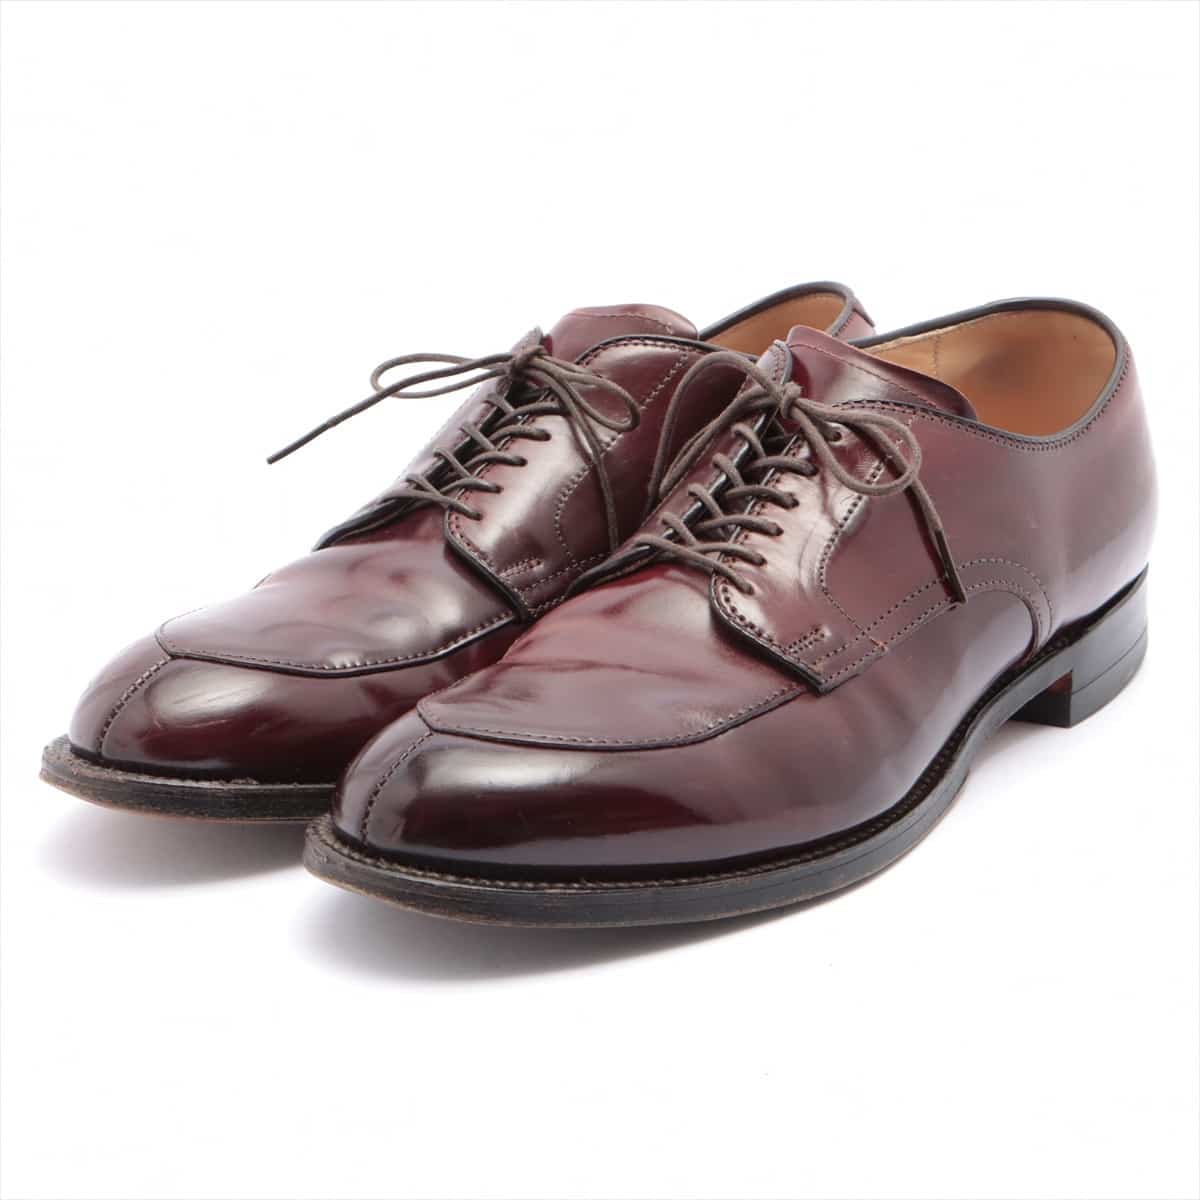 Alden Leather Leather shoes 8.5 Men's Brown V-chip Cordovan